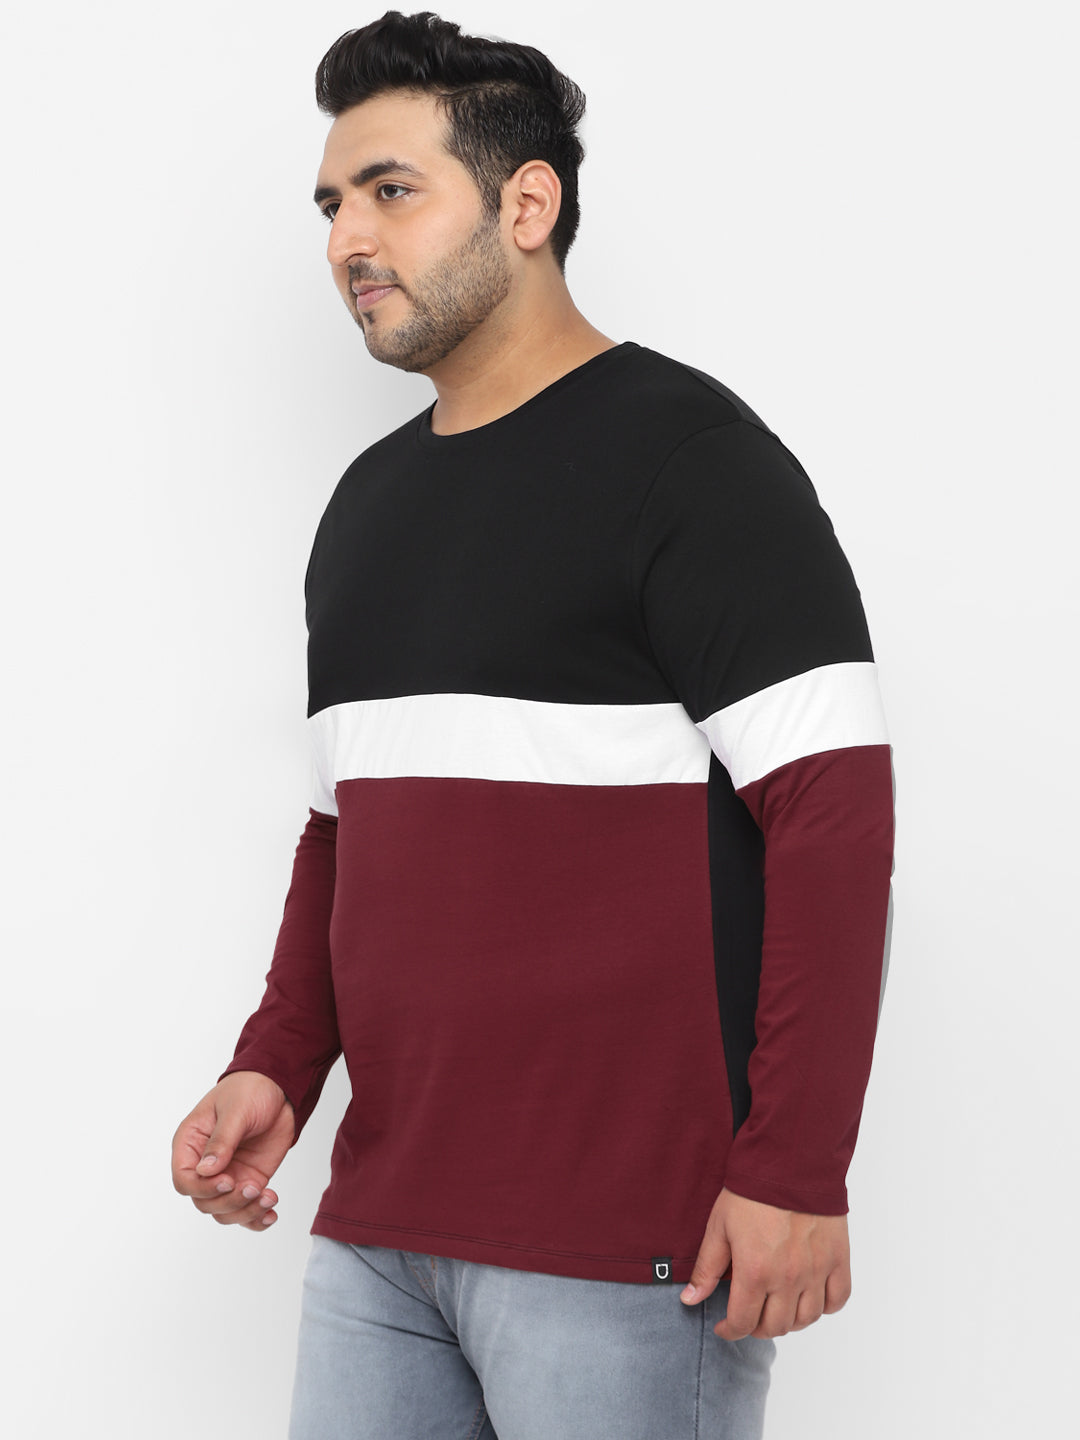 Plus Men's Black, White, Maroon Color-Block Regular Fit Full Sleeve Cotton T-Shirt